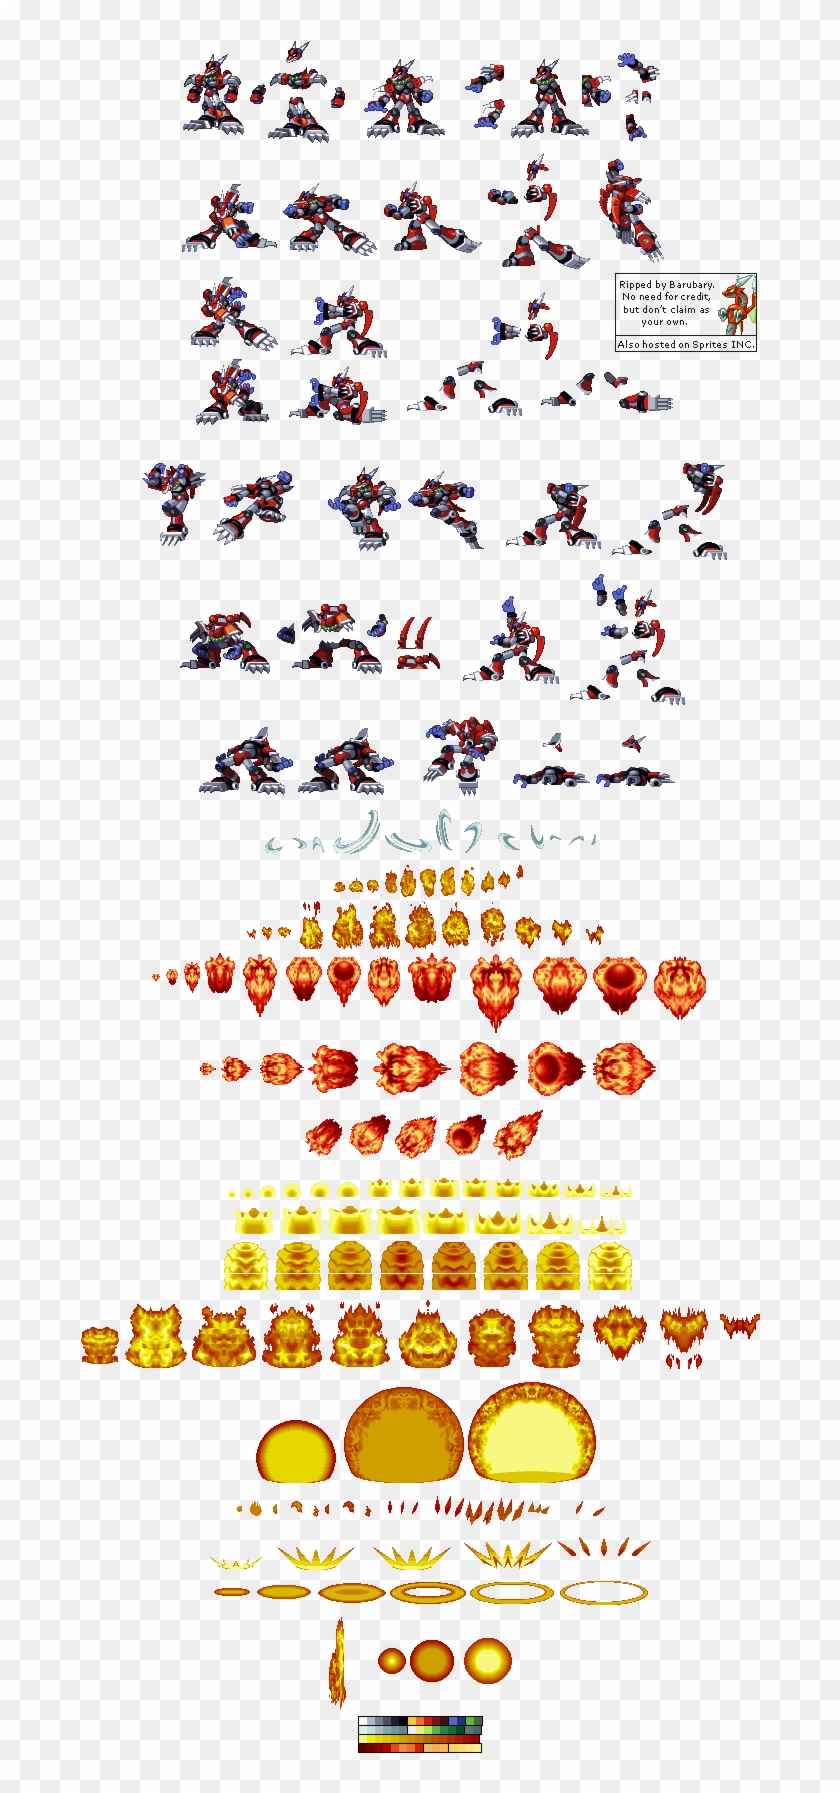 Magma Dragoon Video Game Sprites, Pixel Characters, - Megaman X Magma Dragoon Sprites Clipart #1605575